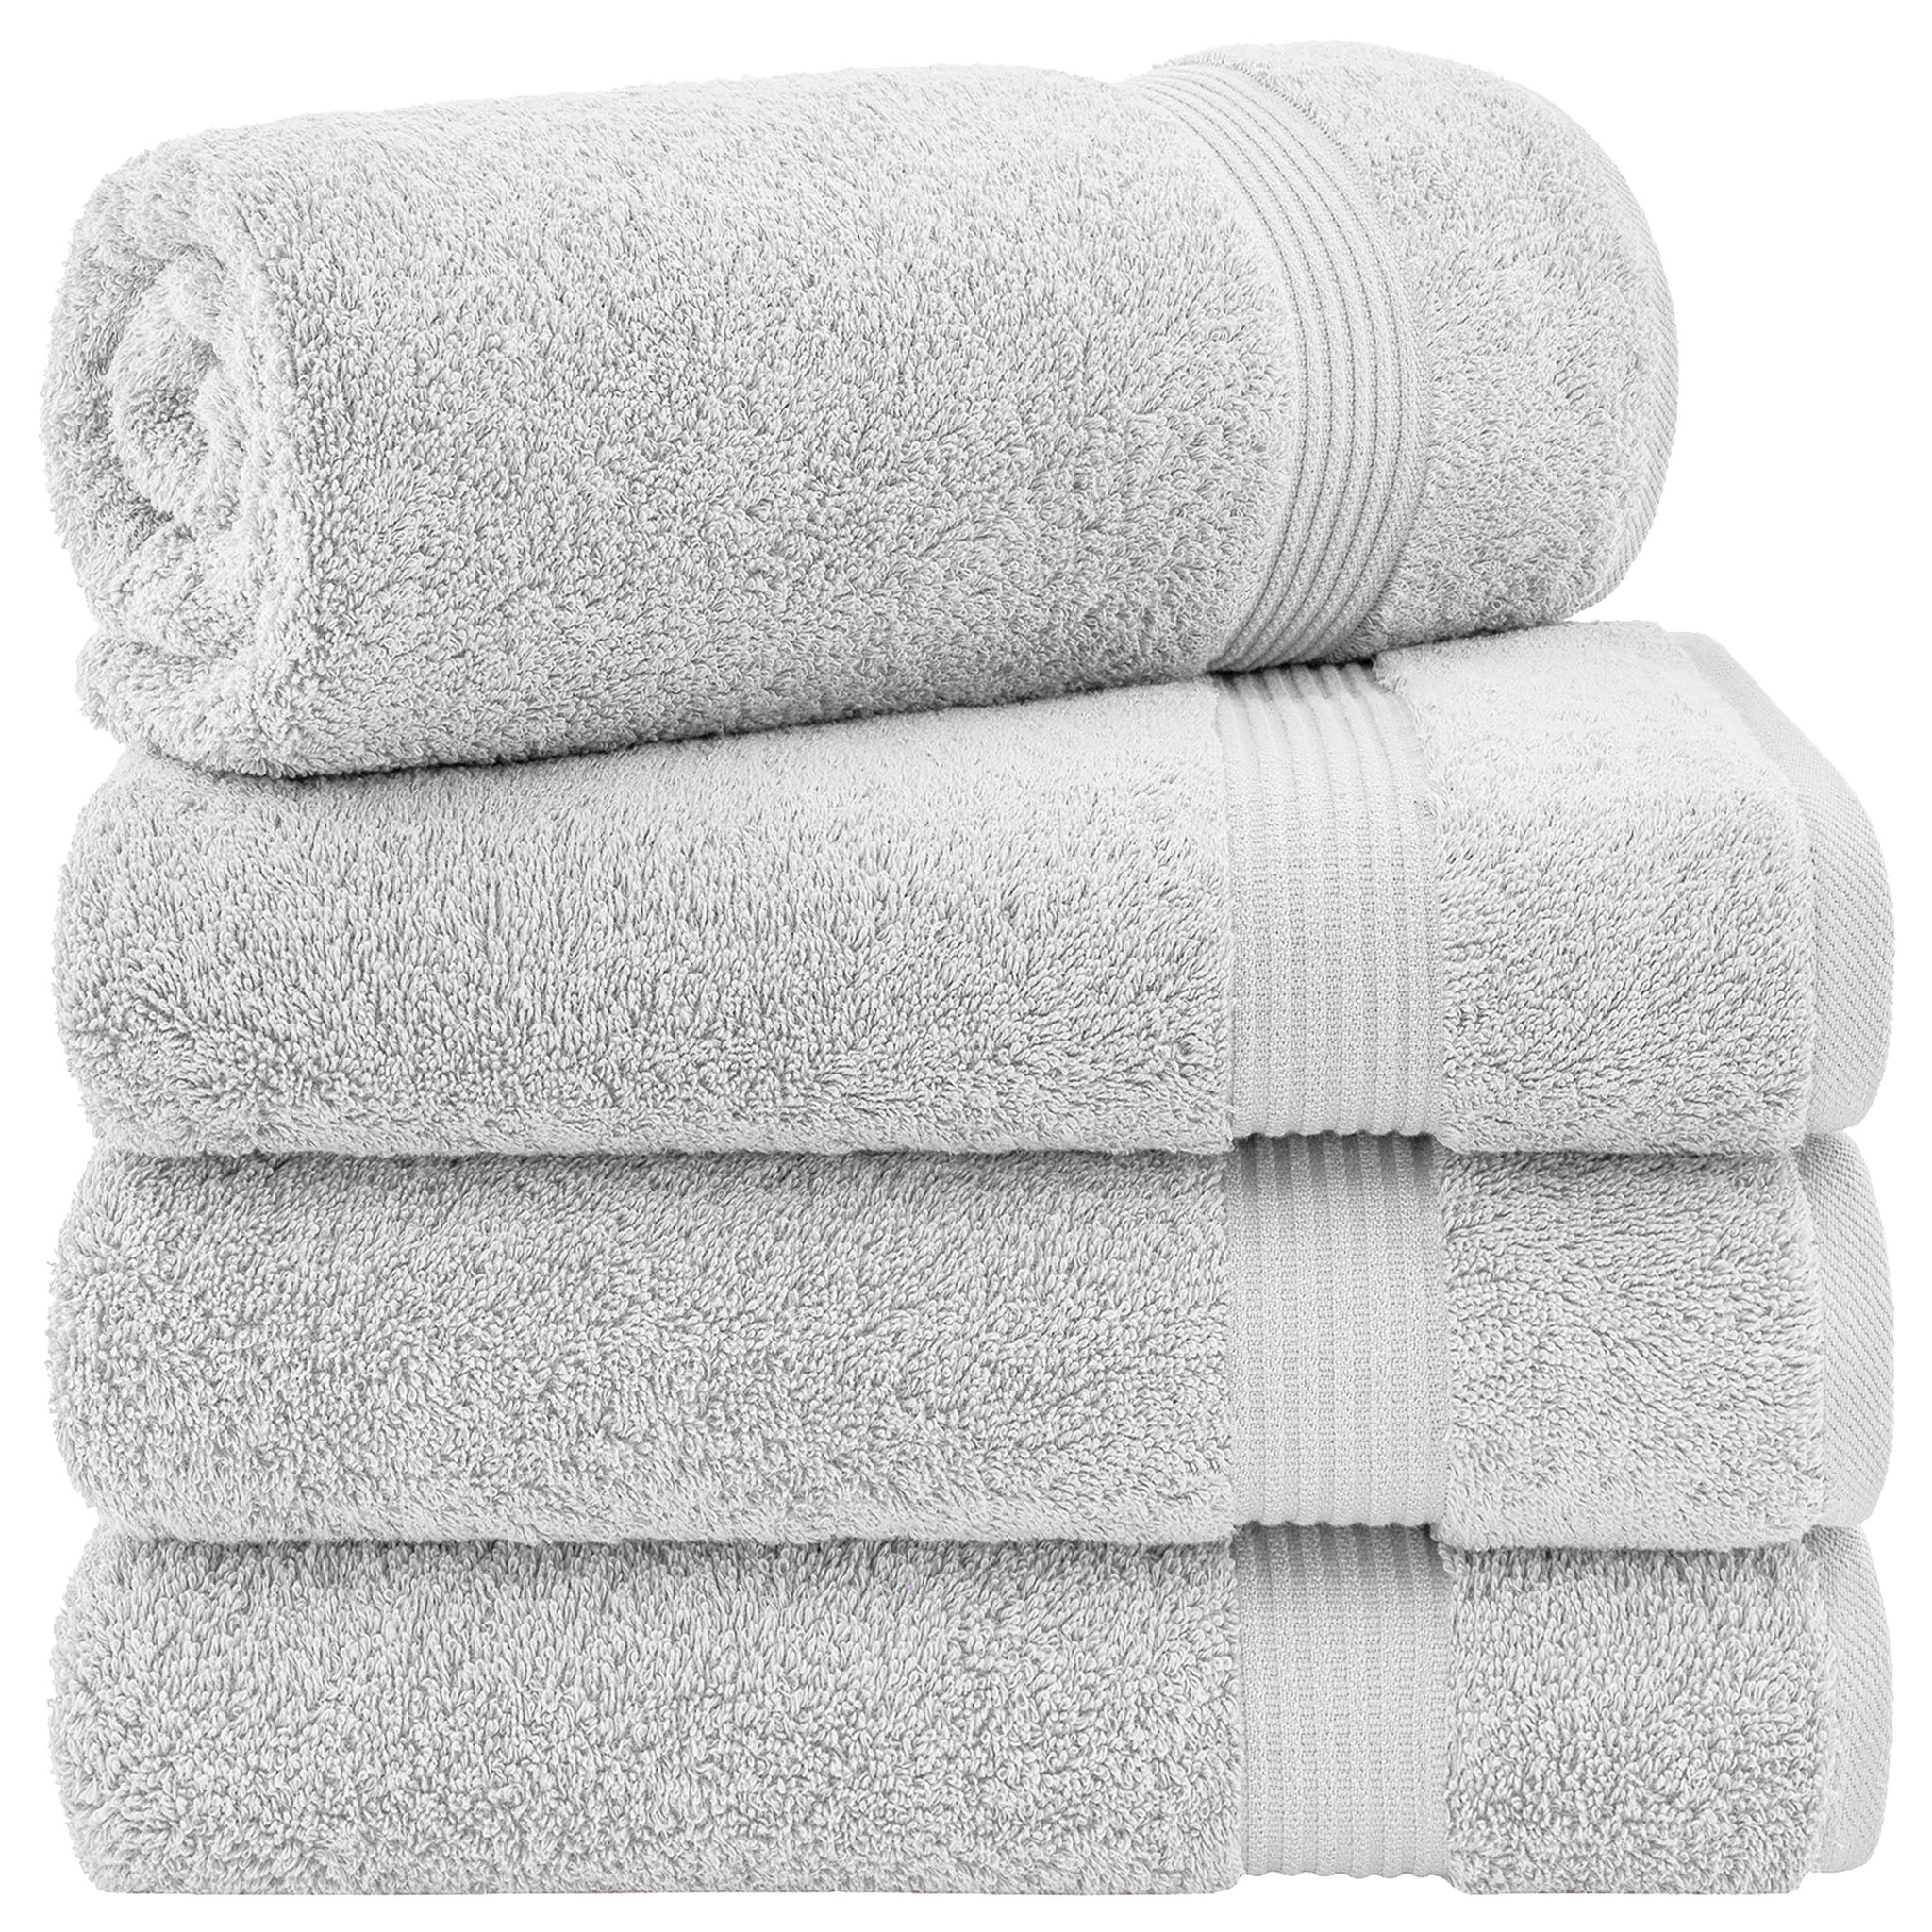 American Soft Linen Bekos 100% Cotton Turkish Towels, 4 Piece Bath Towel Set -silver-gray-01